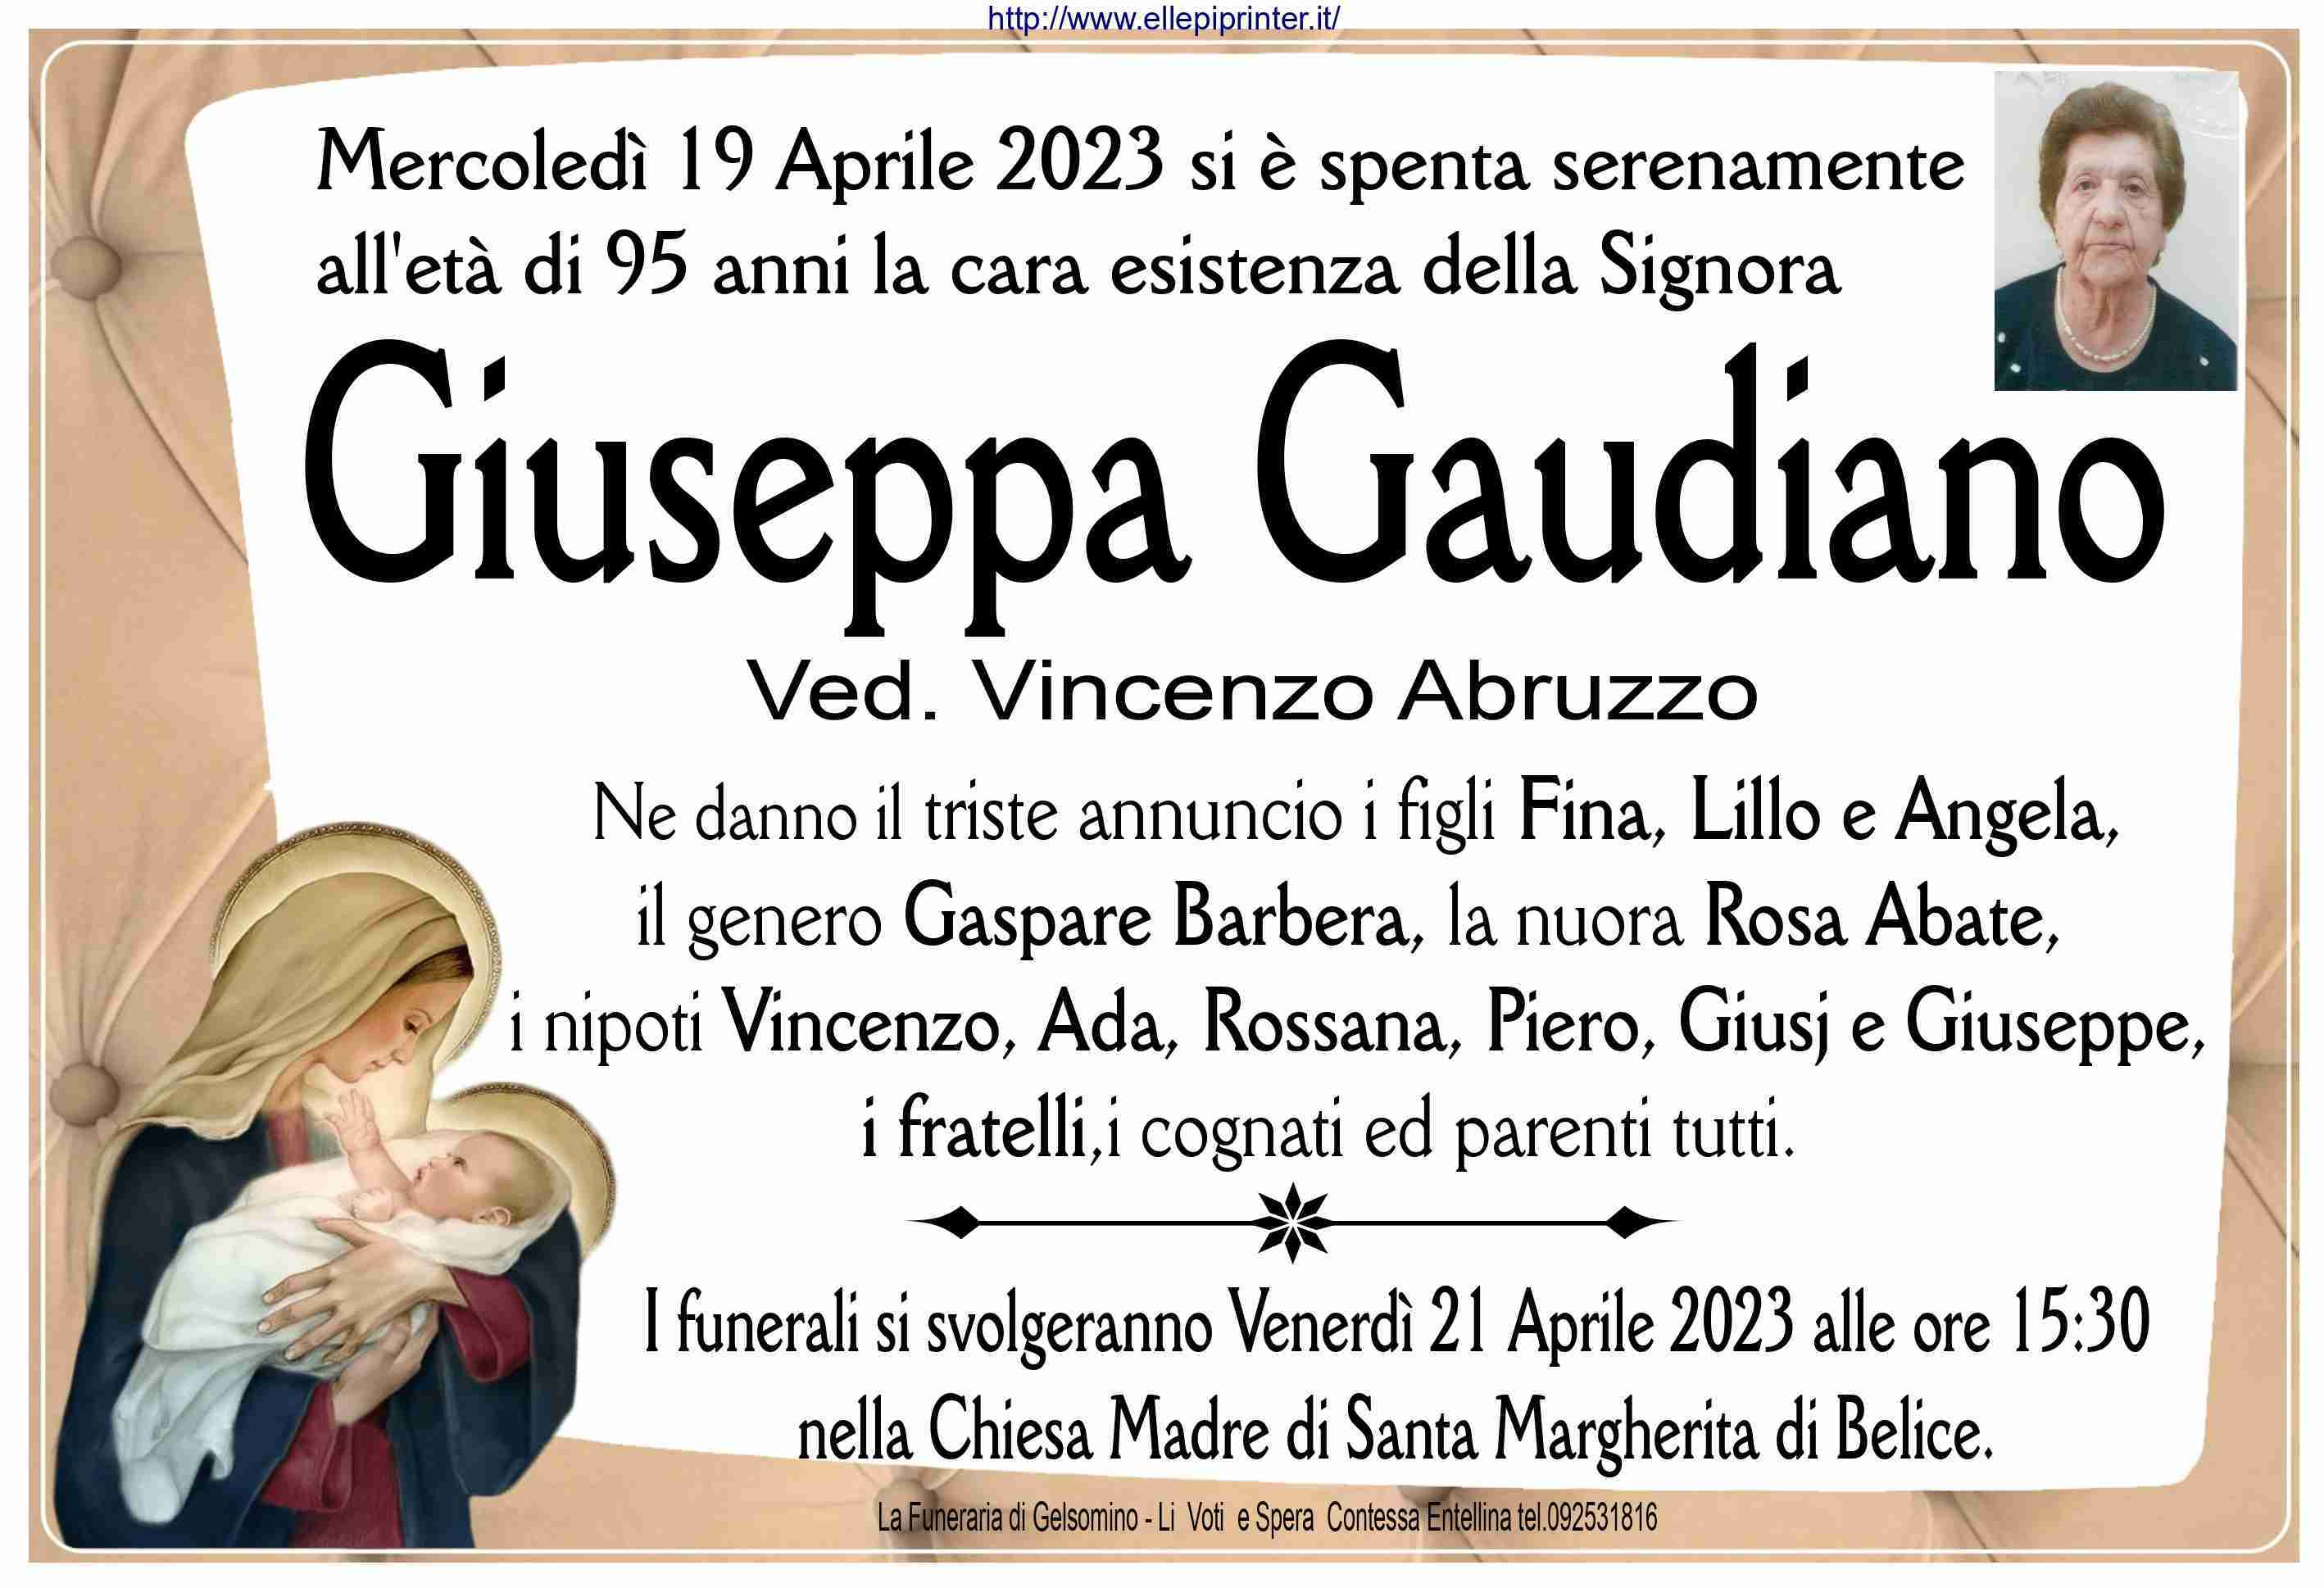 Giuseppa Gaudiano